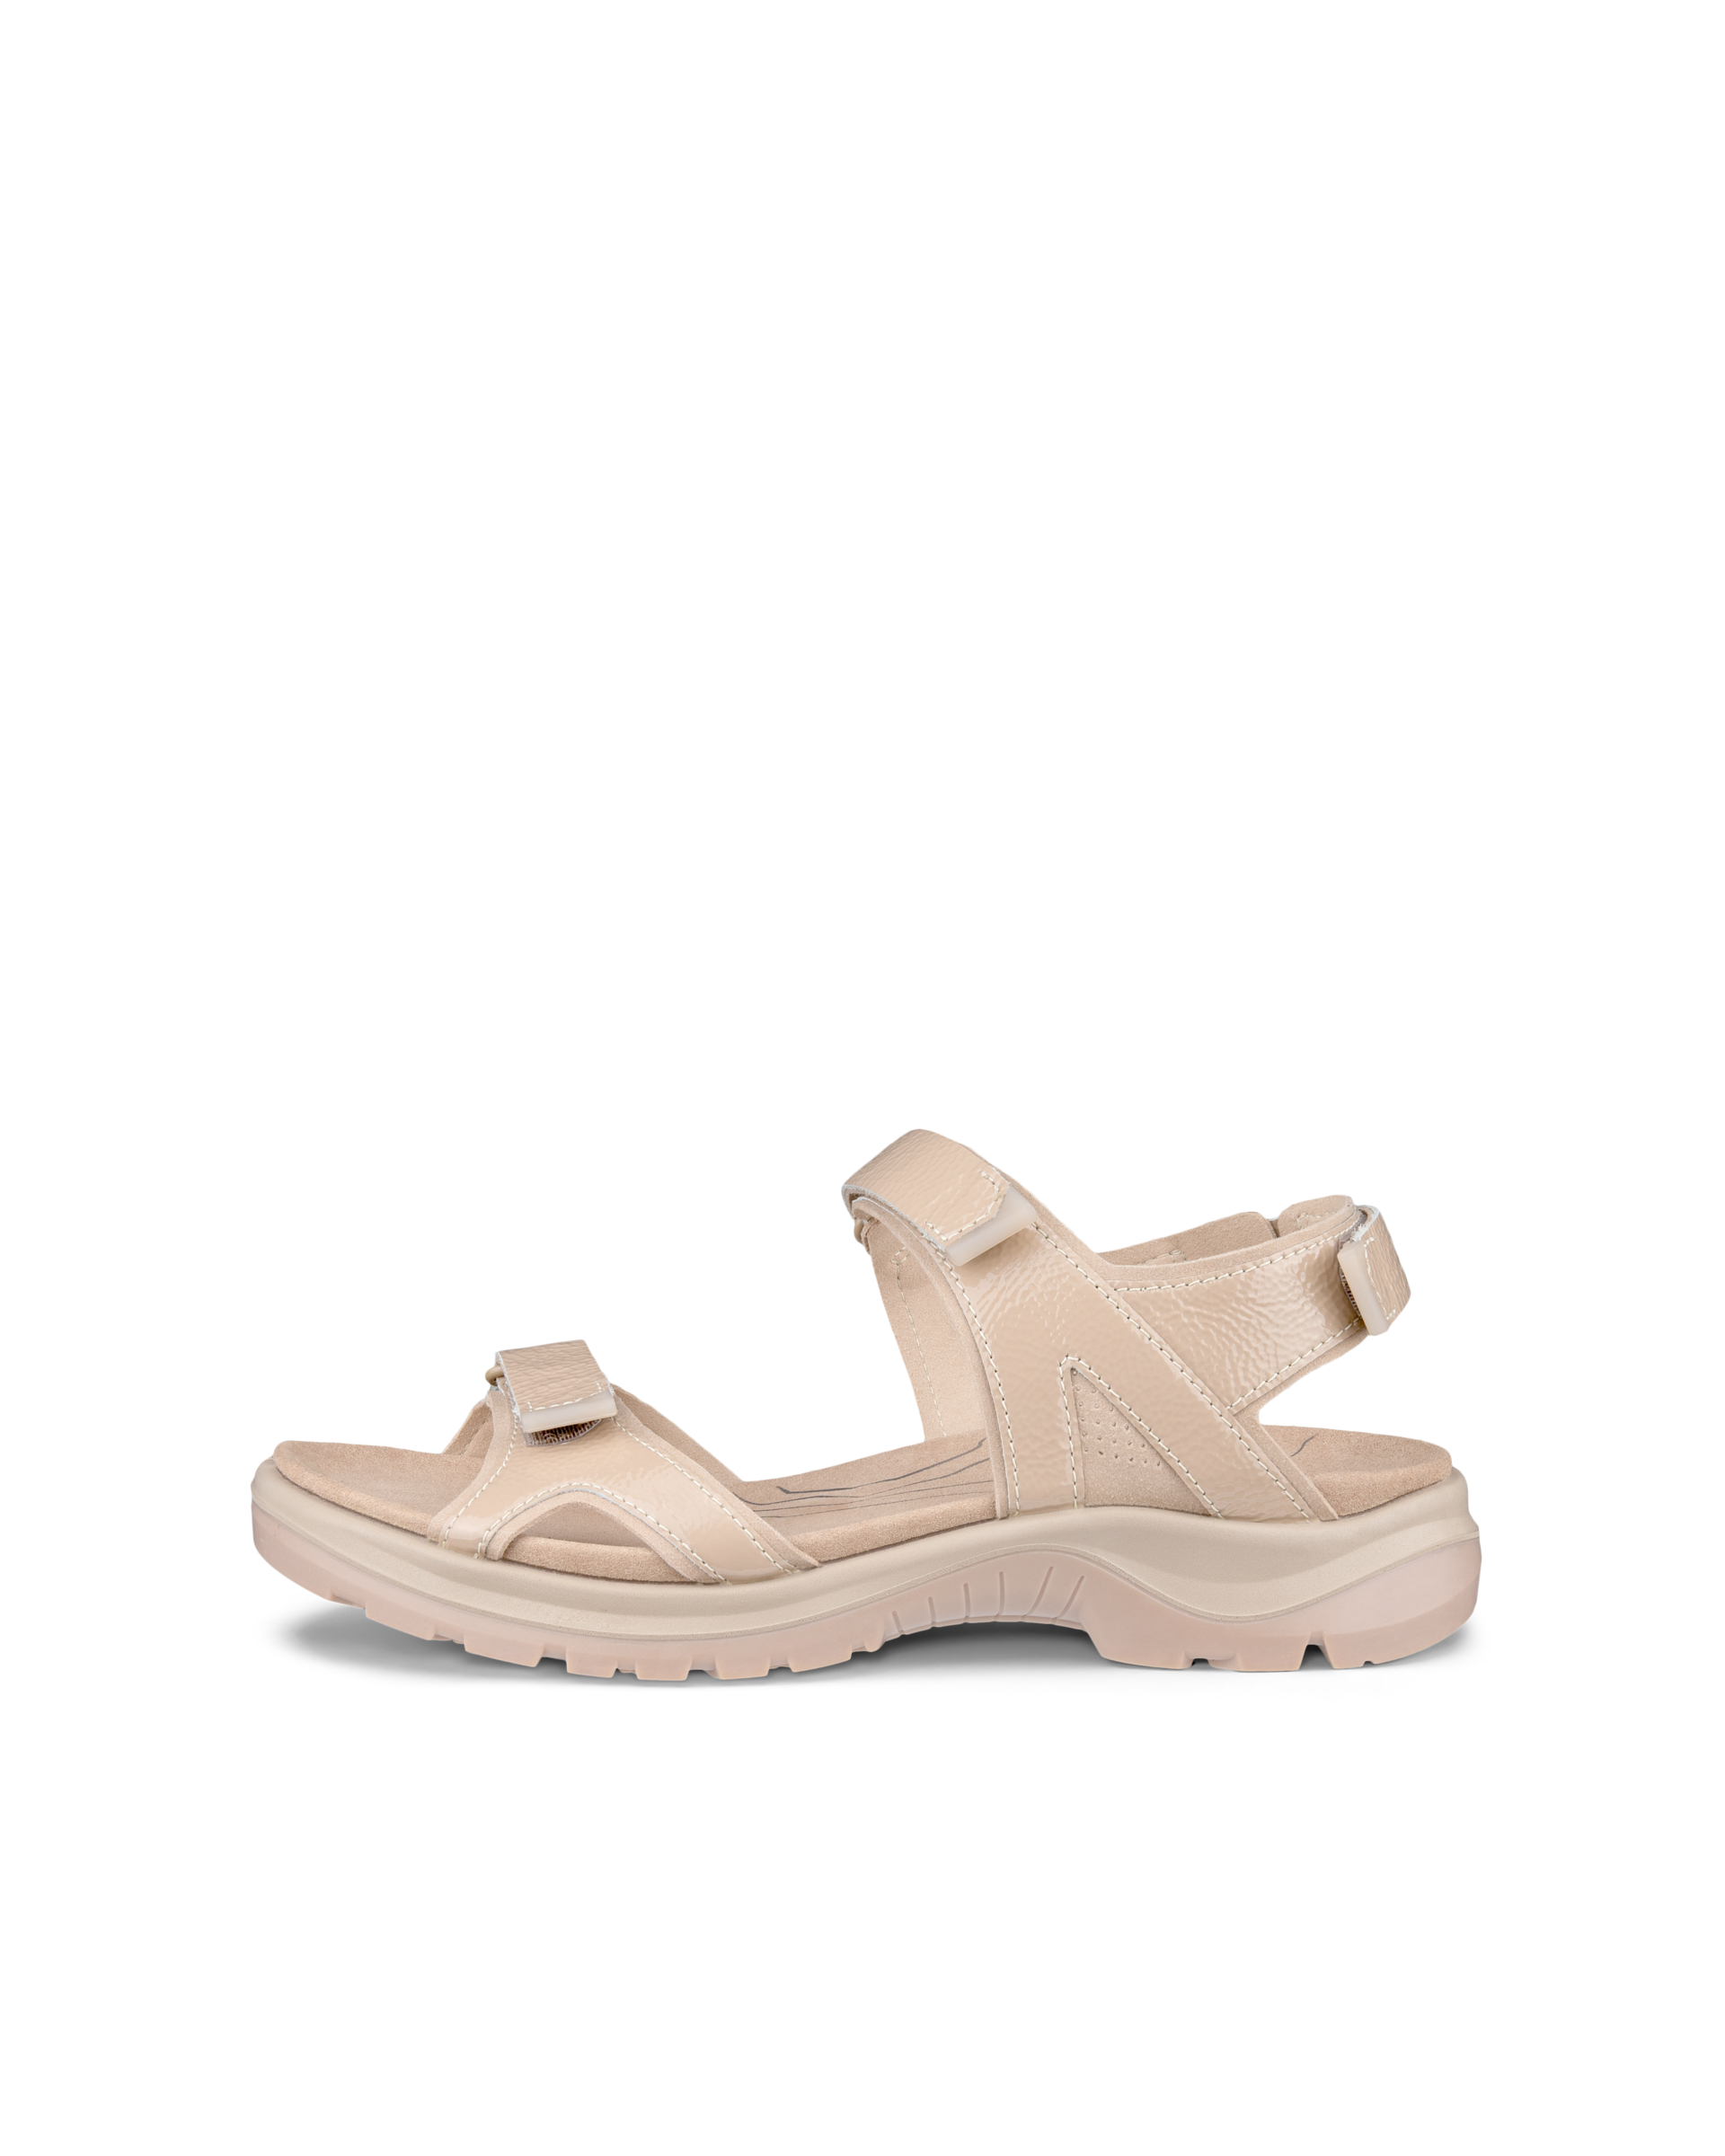 Buy Women Yellow Casual Sandals Online | SKU: 33-3009-33-36-Metro Shoes